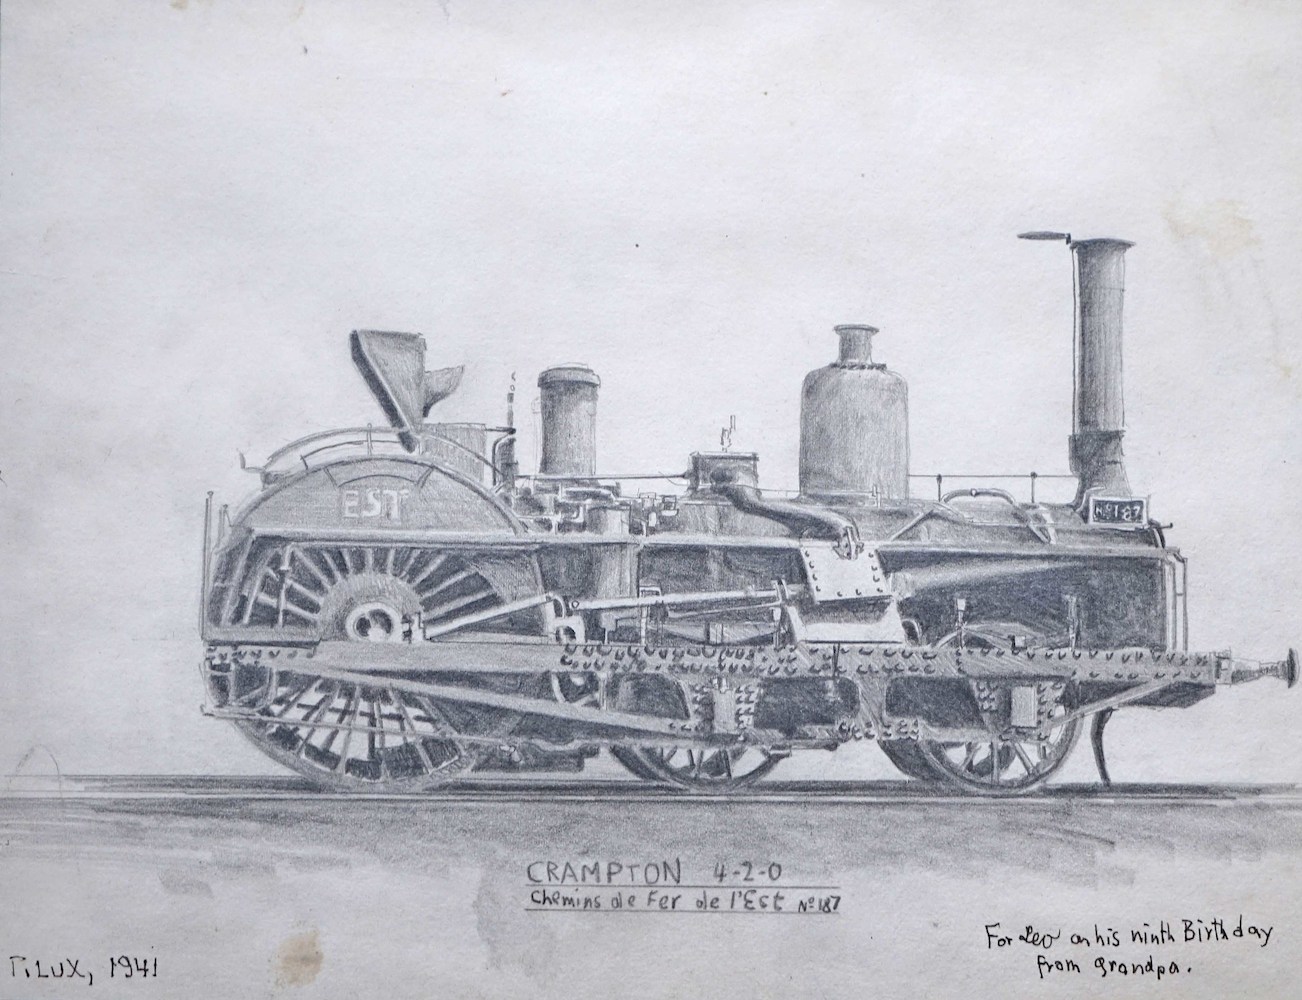 Locomotives. Crampton 4-2-0, Chemins de Fer de l'Est No. 187 / The 